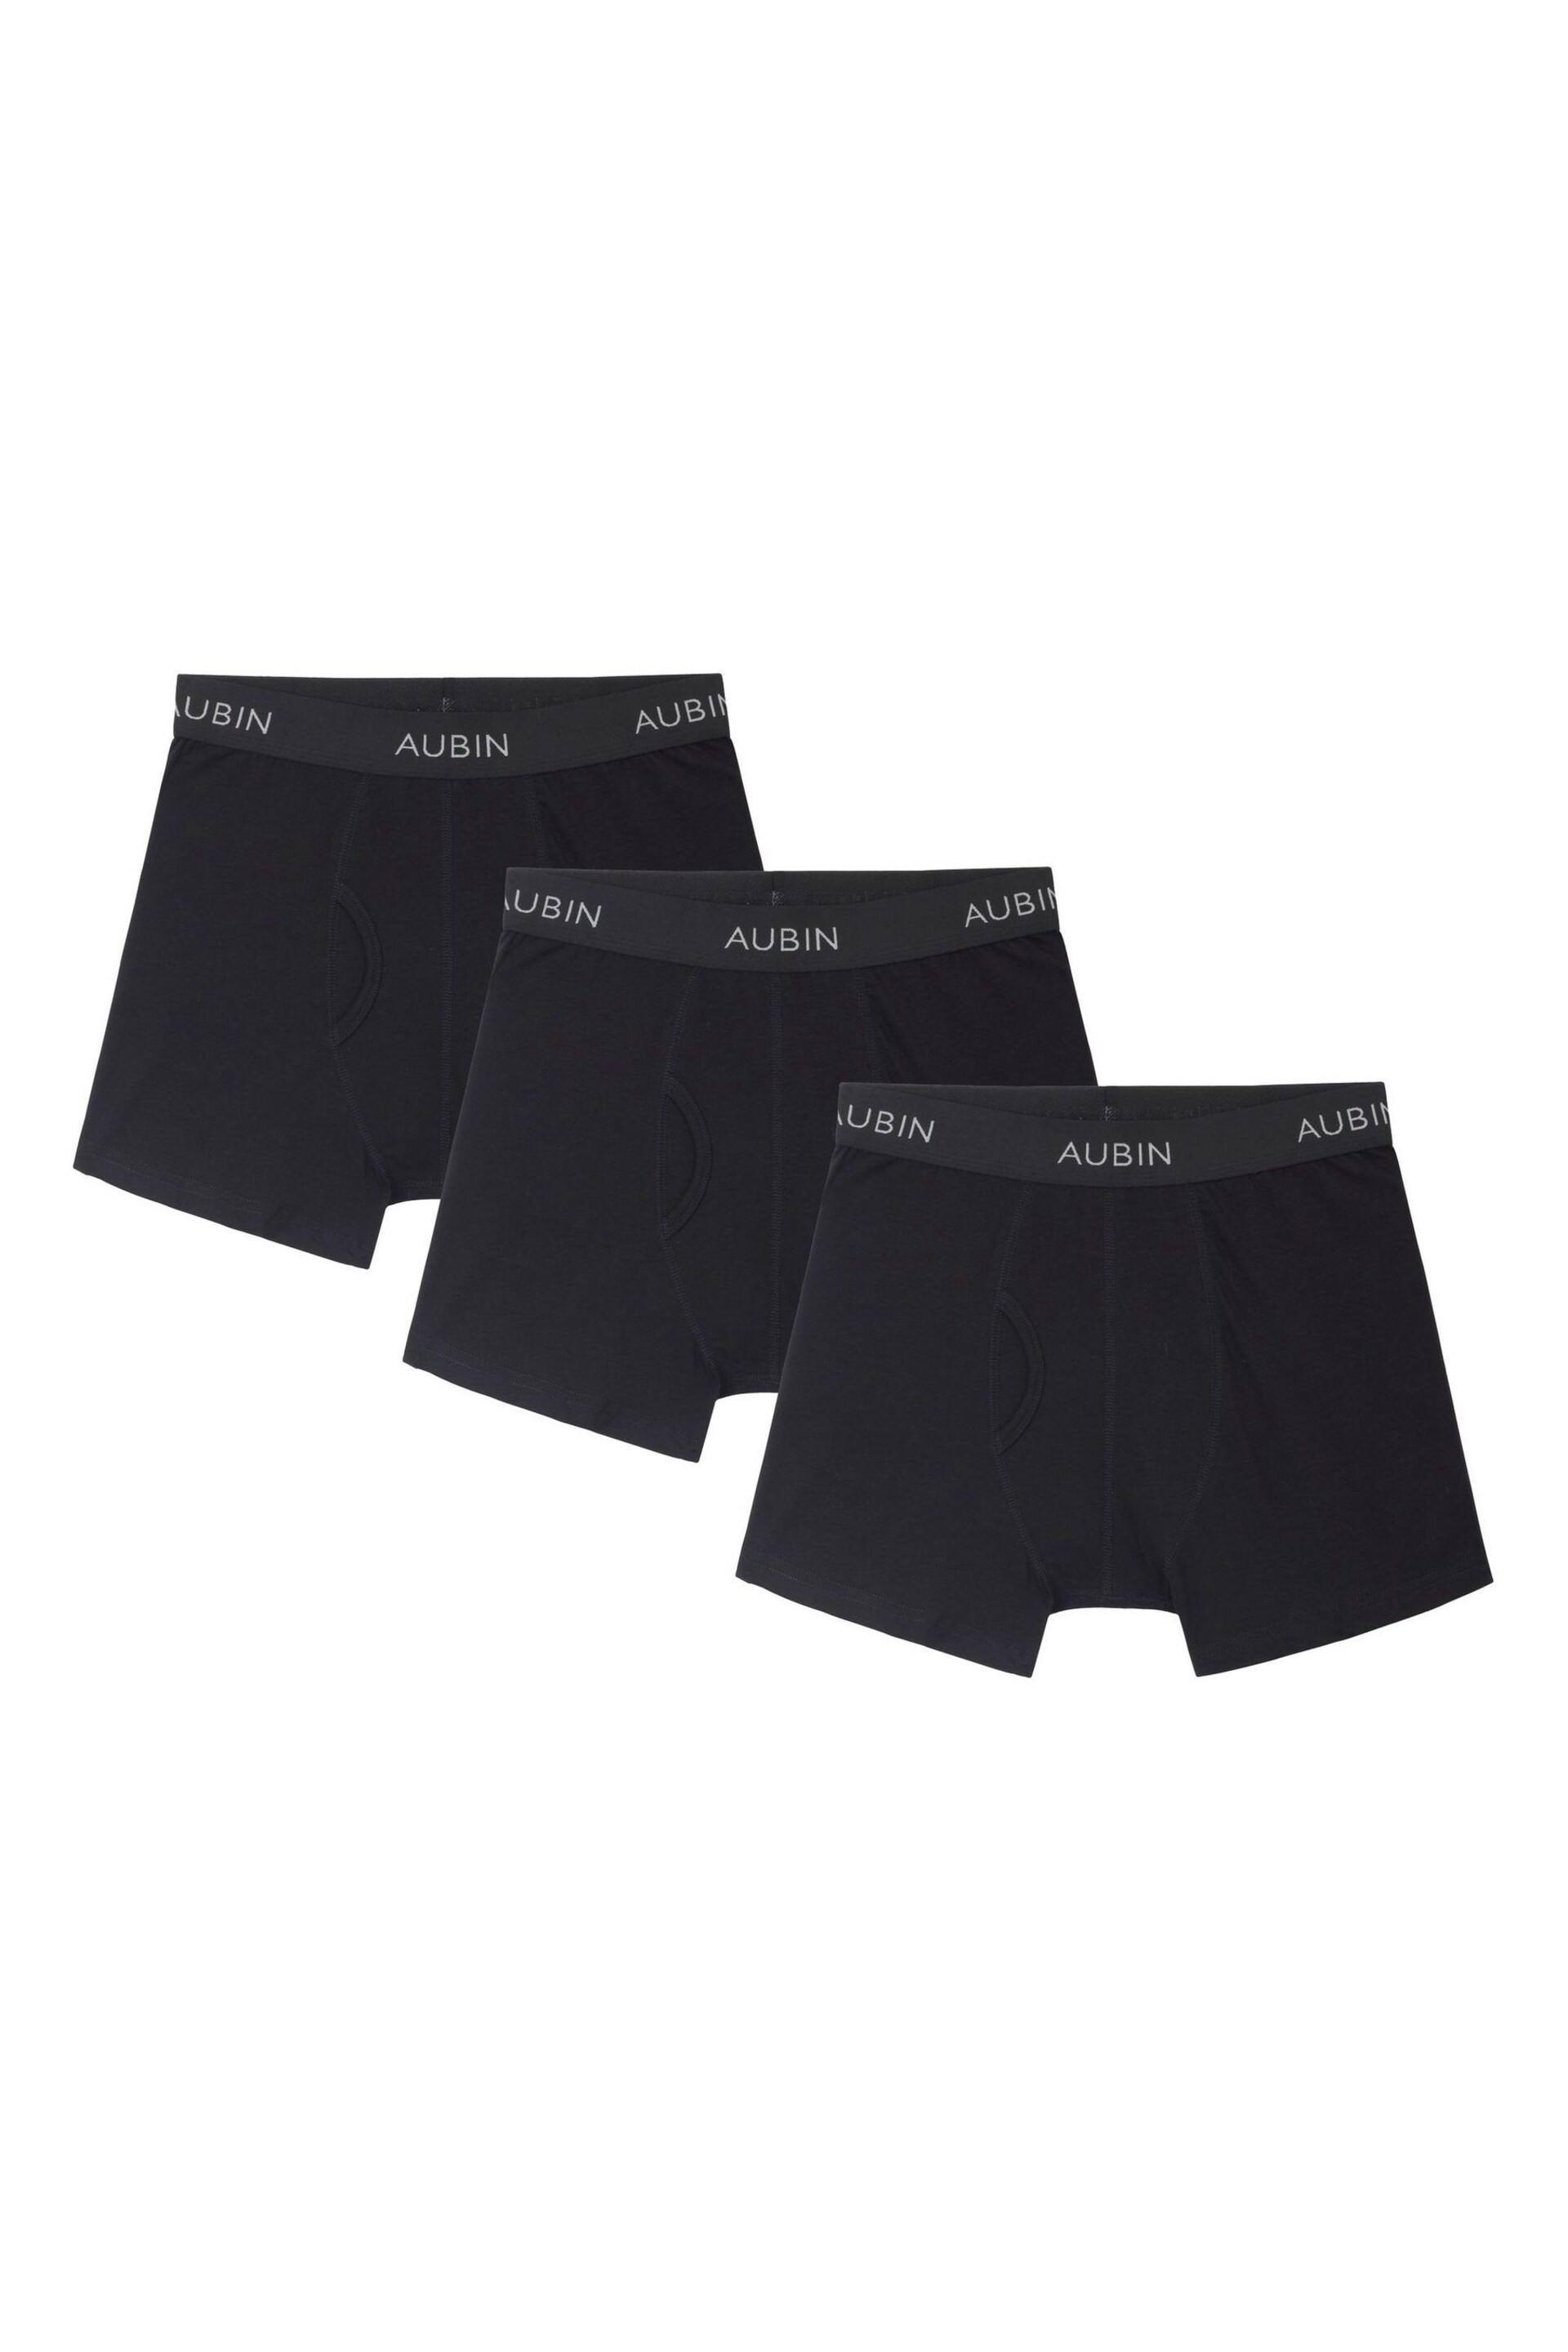 Aubin Hellston Boxer Shorts 3 Pack - Image 1 of 6